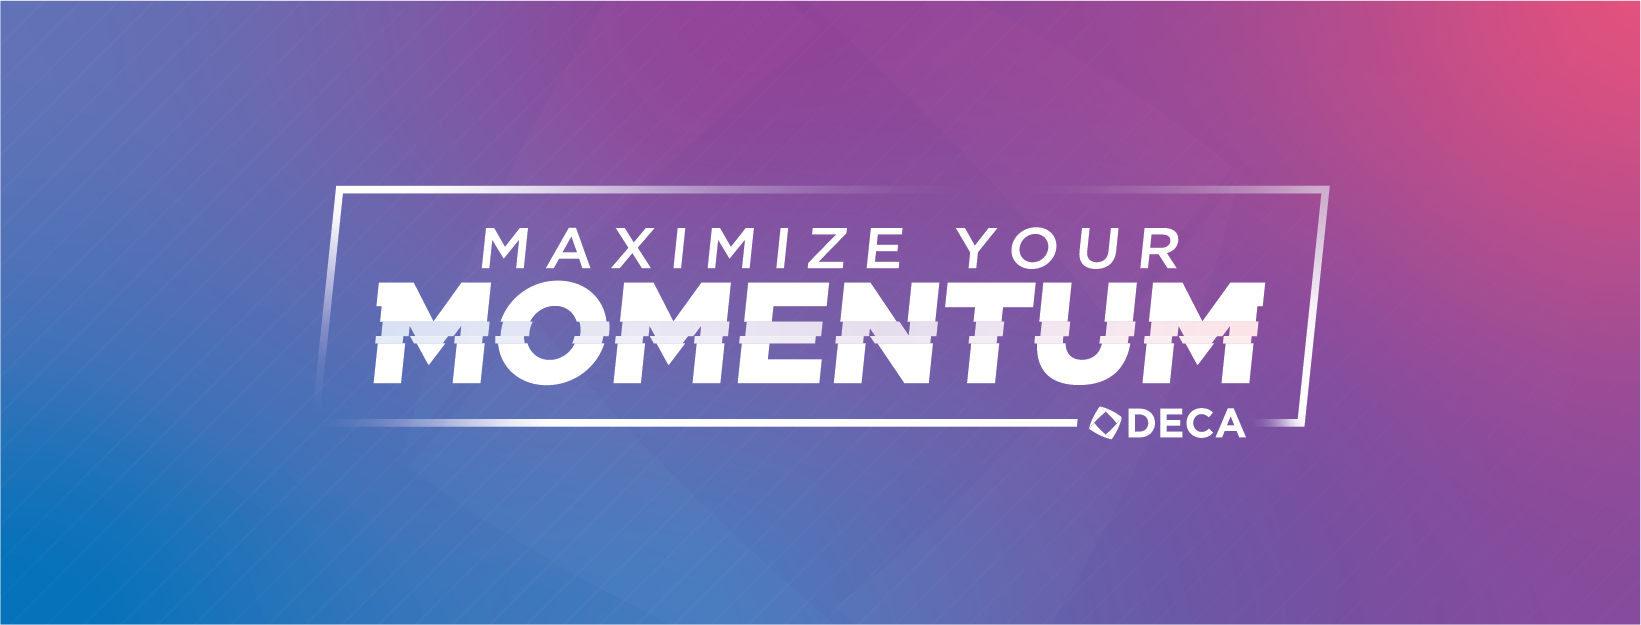 Maximize your Momentum